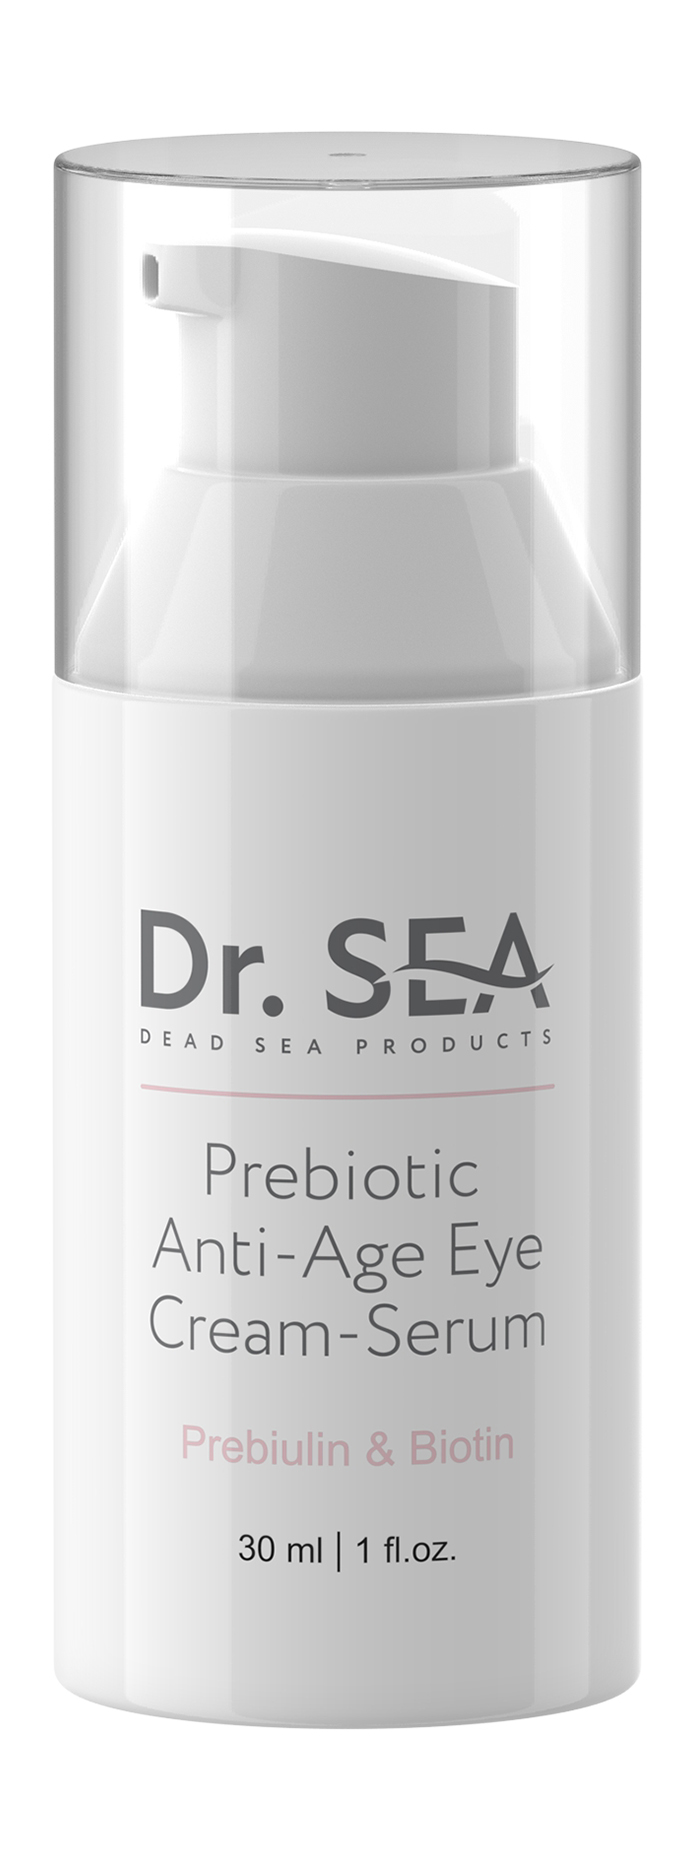 Сыворотка-крем для области вокруг глаз DrSea Prebiotic Anti-Age Eye Cream-Serum сыворотка для области вокруг глаз обновляющая botavikos 30 мл